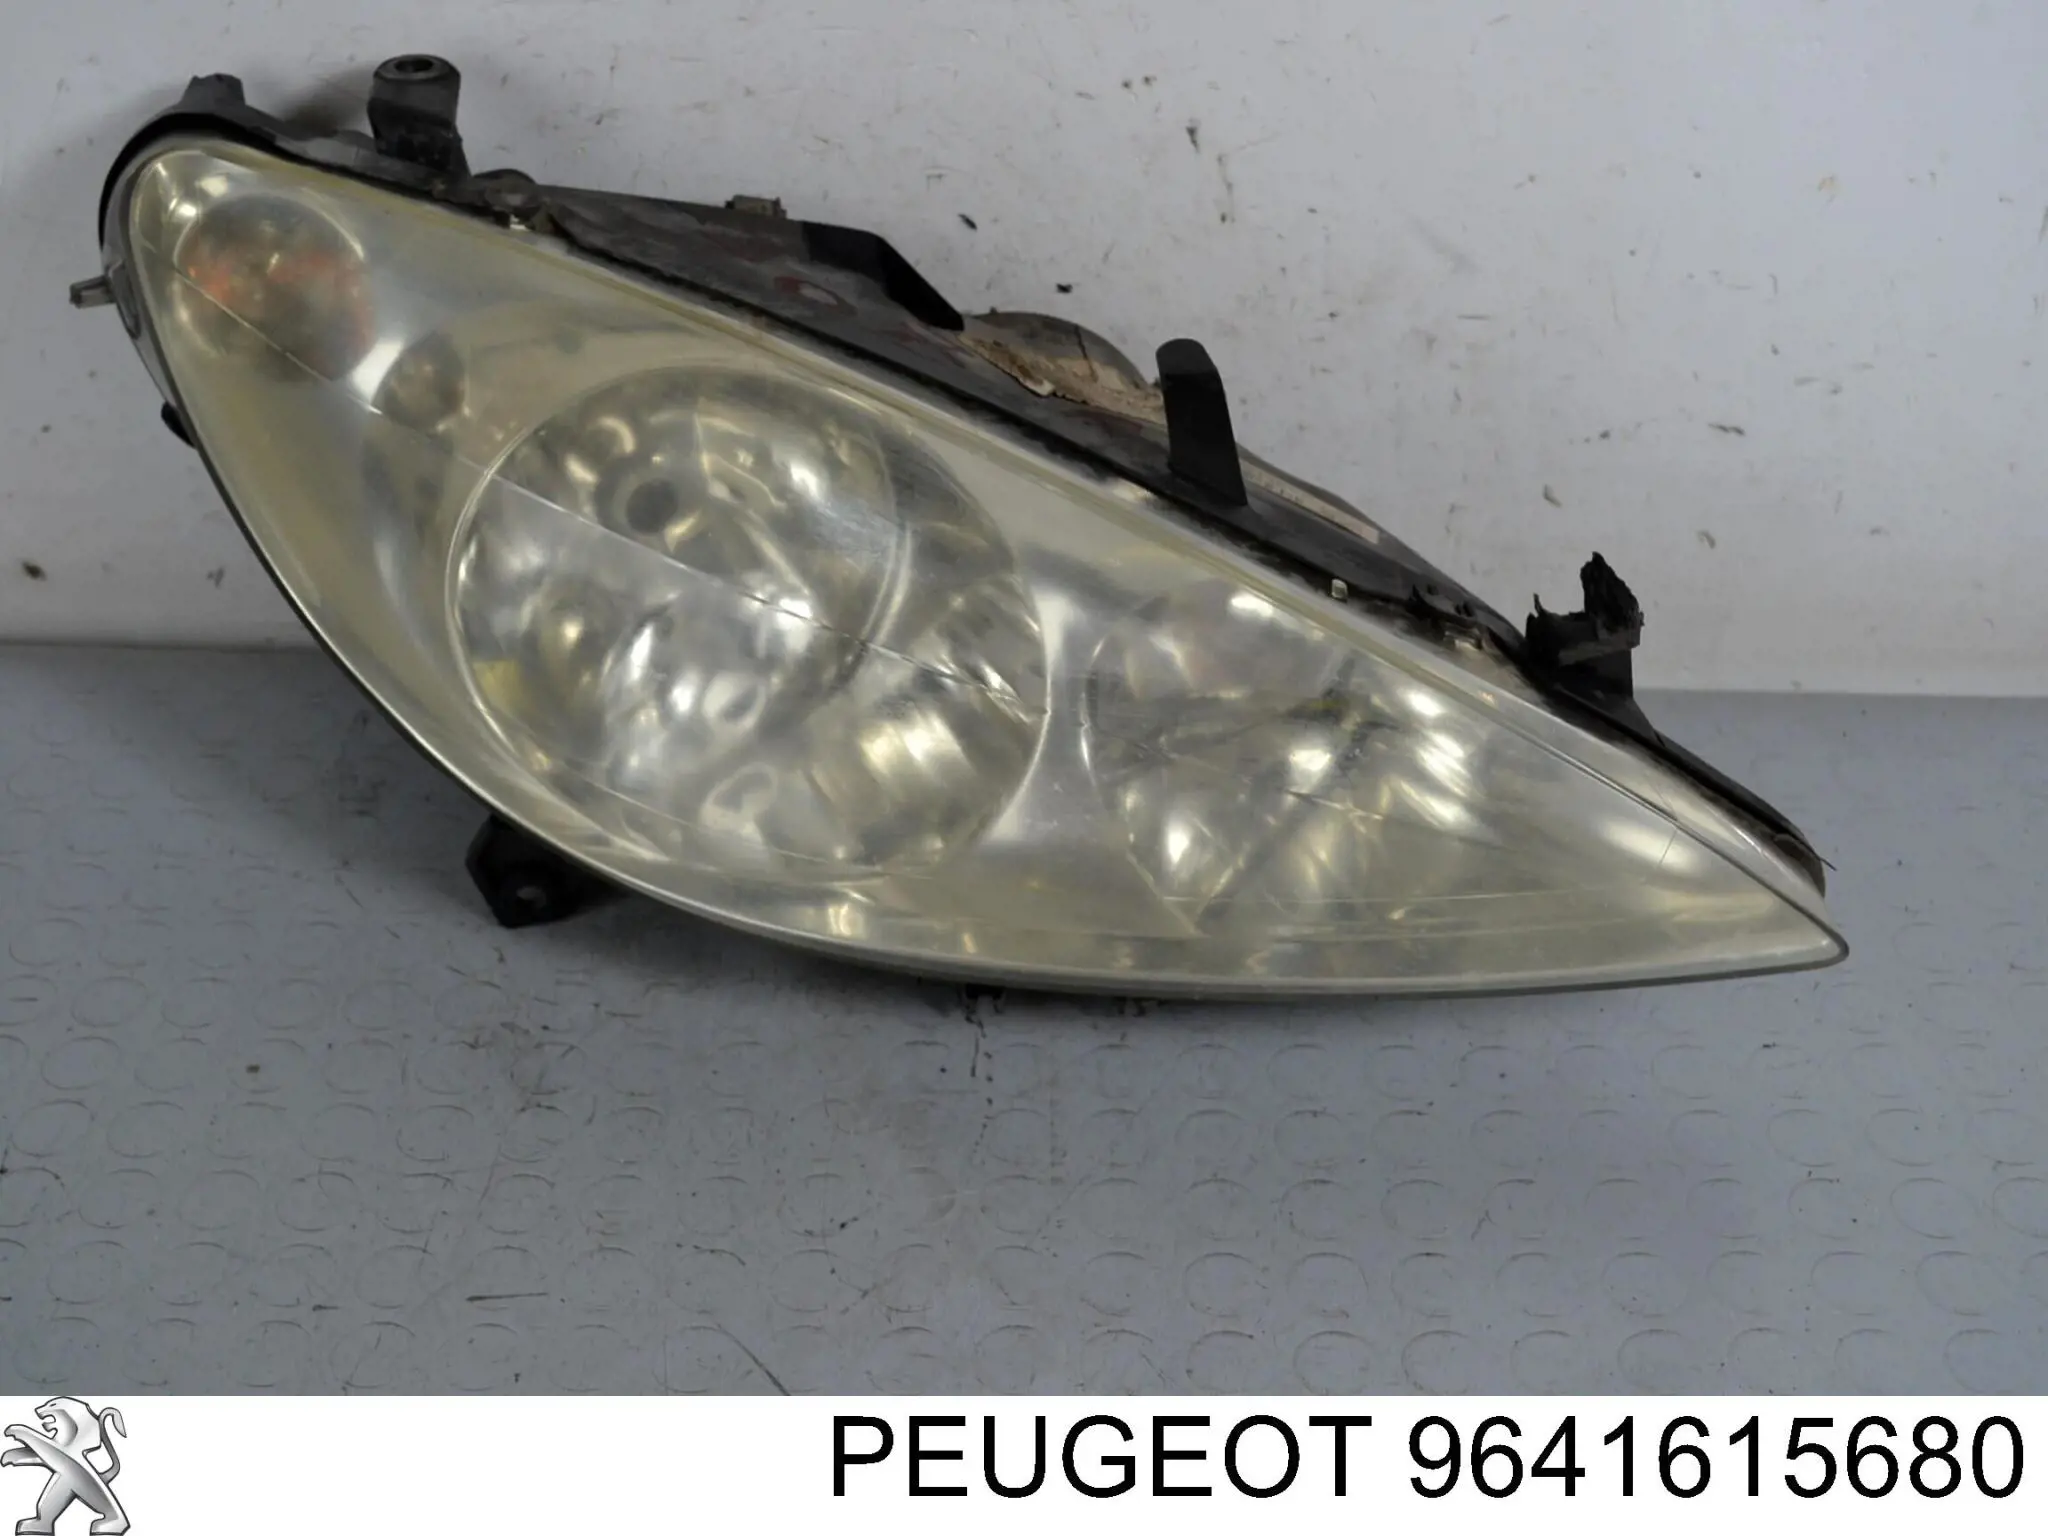 9641615680 Peugeot/Citroen faro derecho